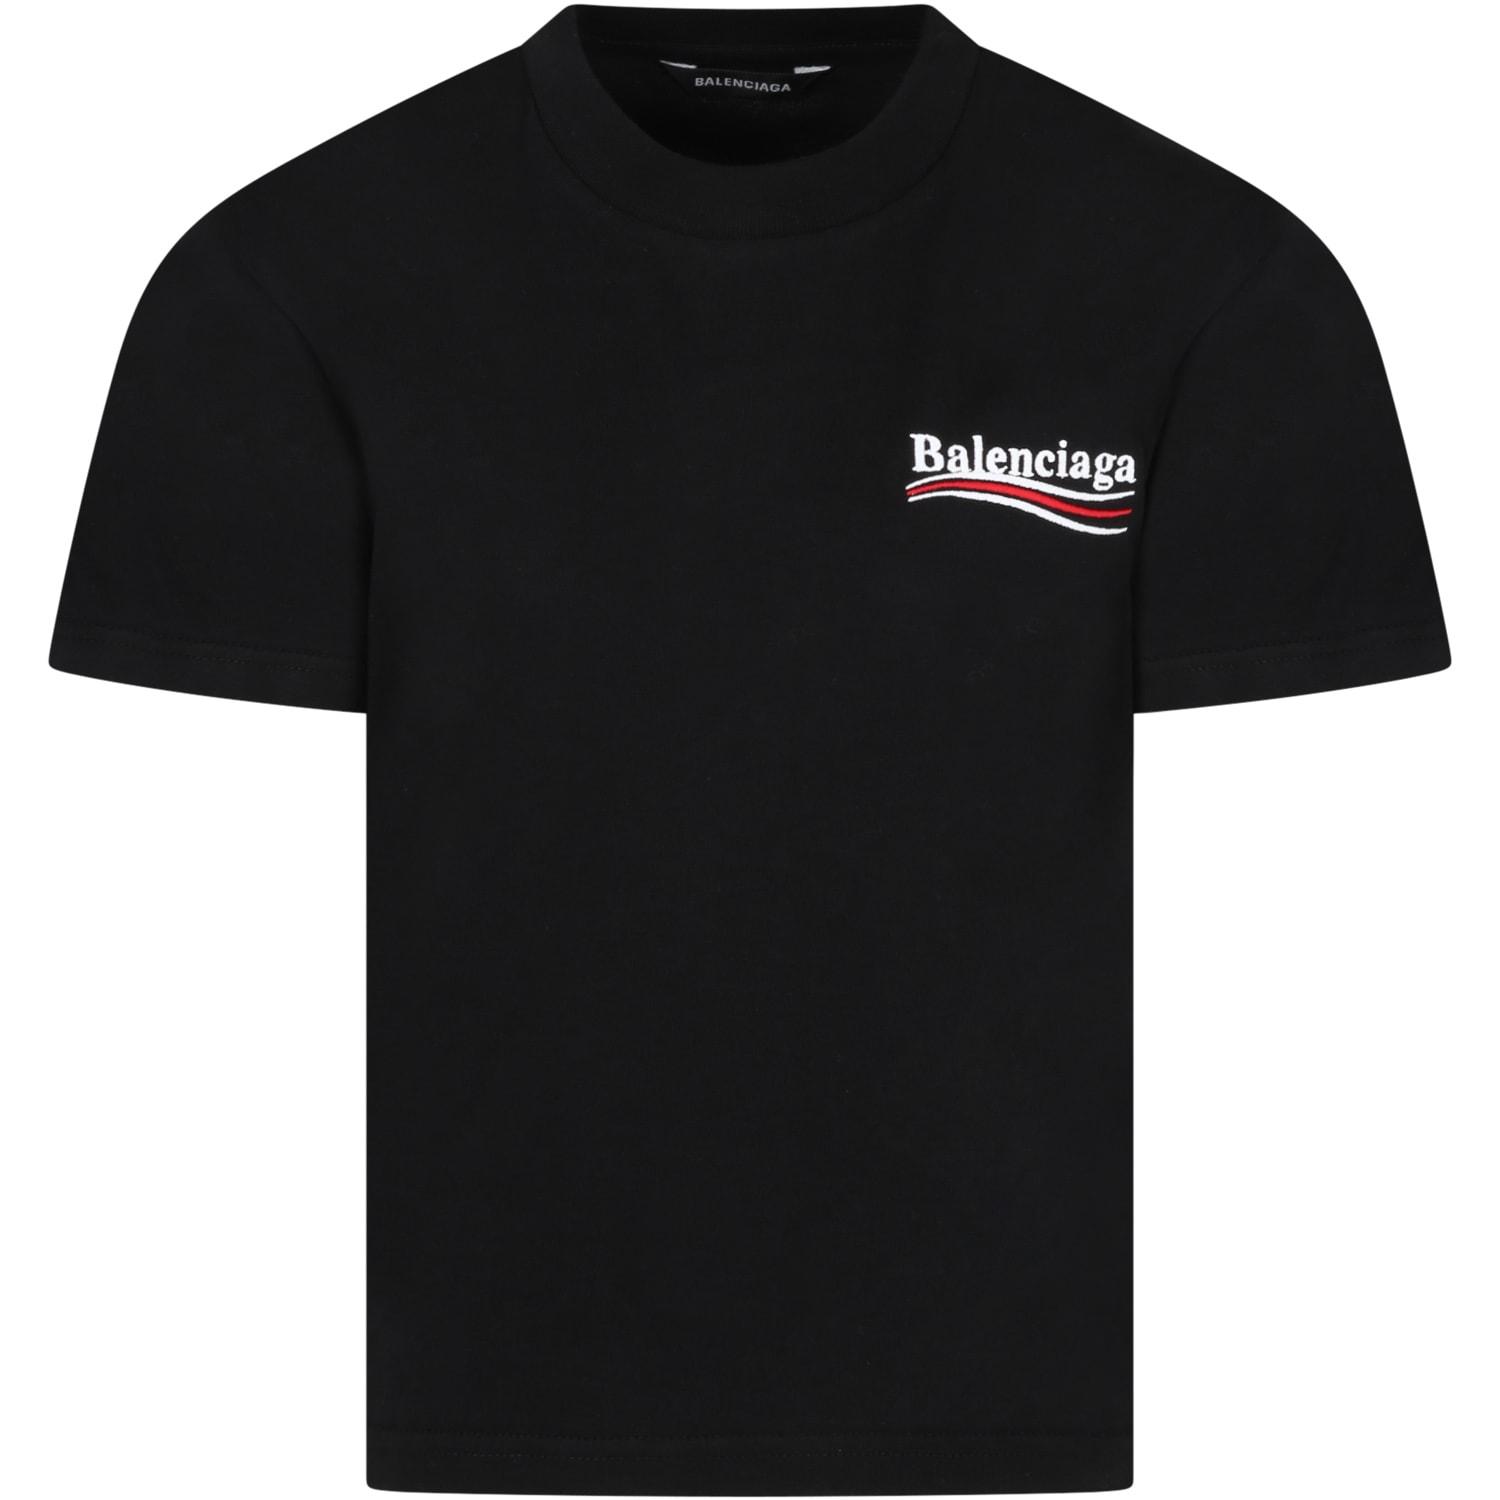 Balenciaga Black T-shirt For Kids With White Logo